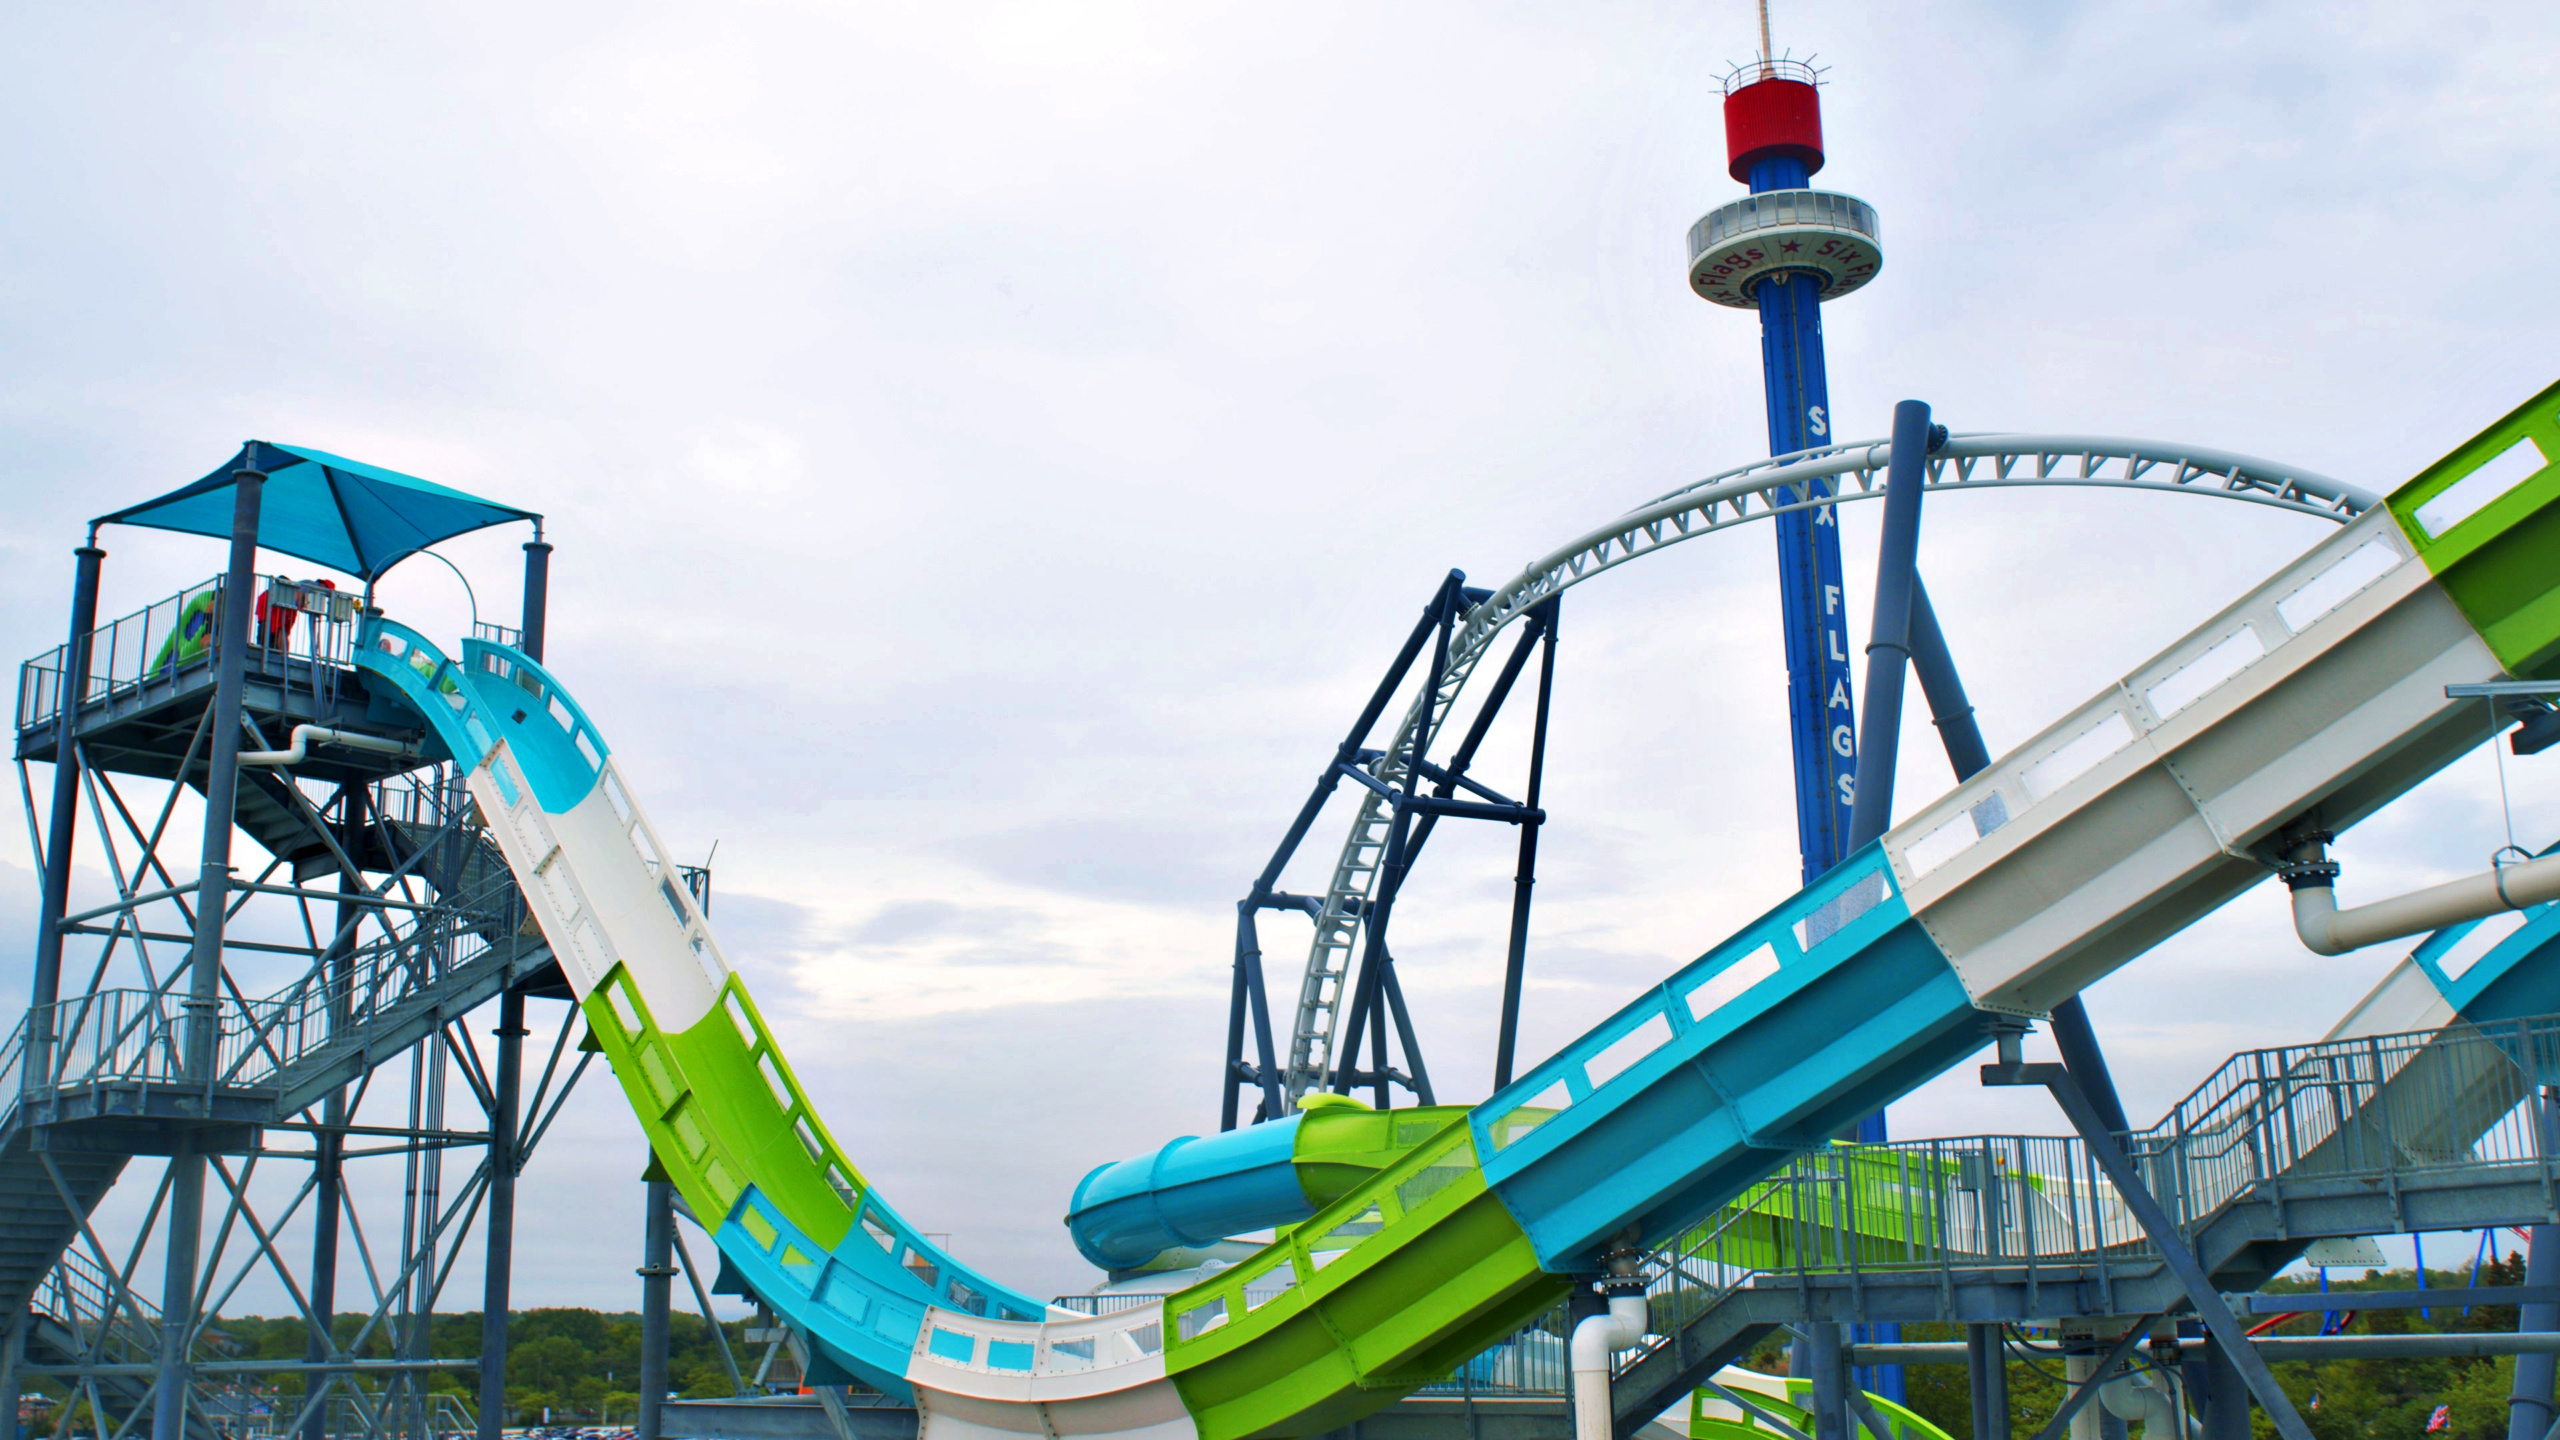 Blue green Tsunami Surge water coaster at Six Flags Hurricane Harbor